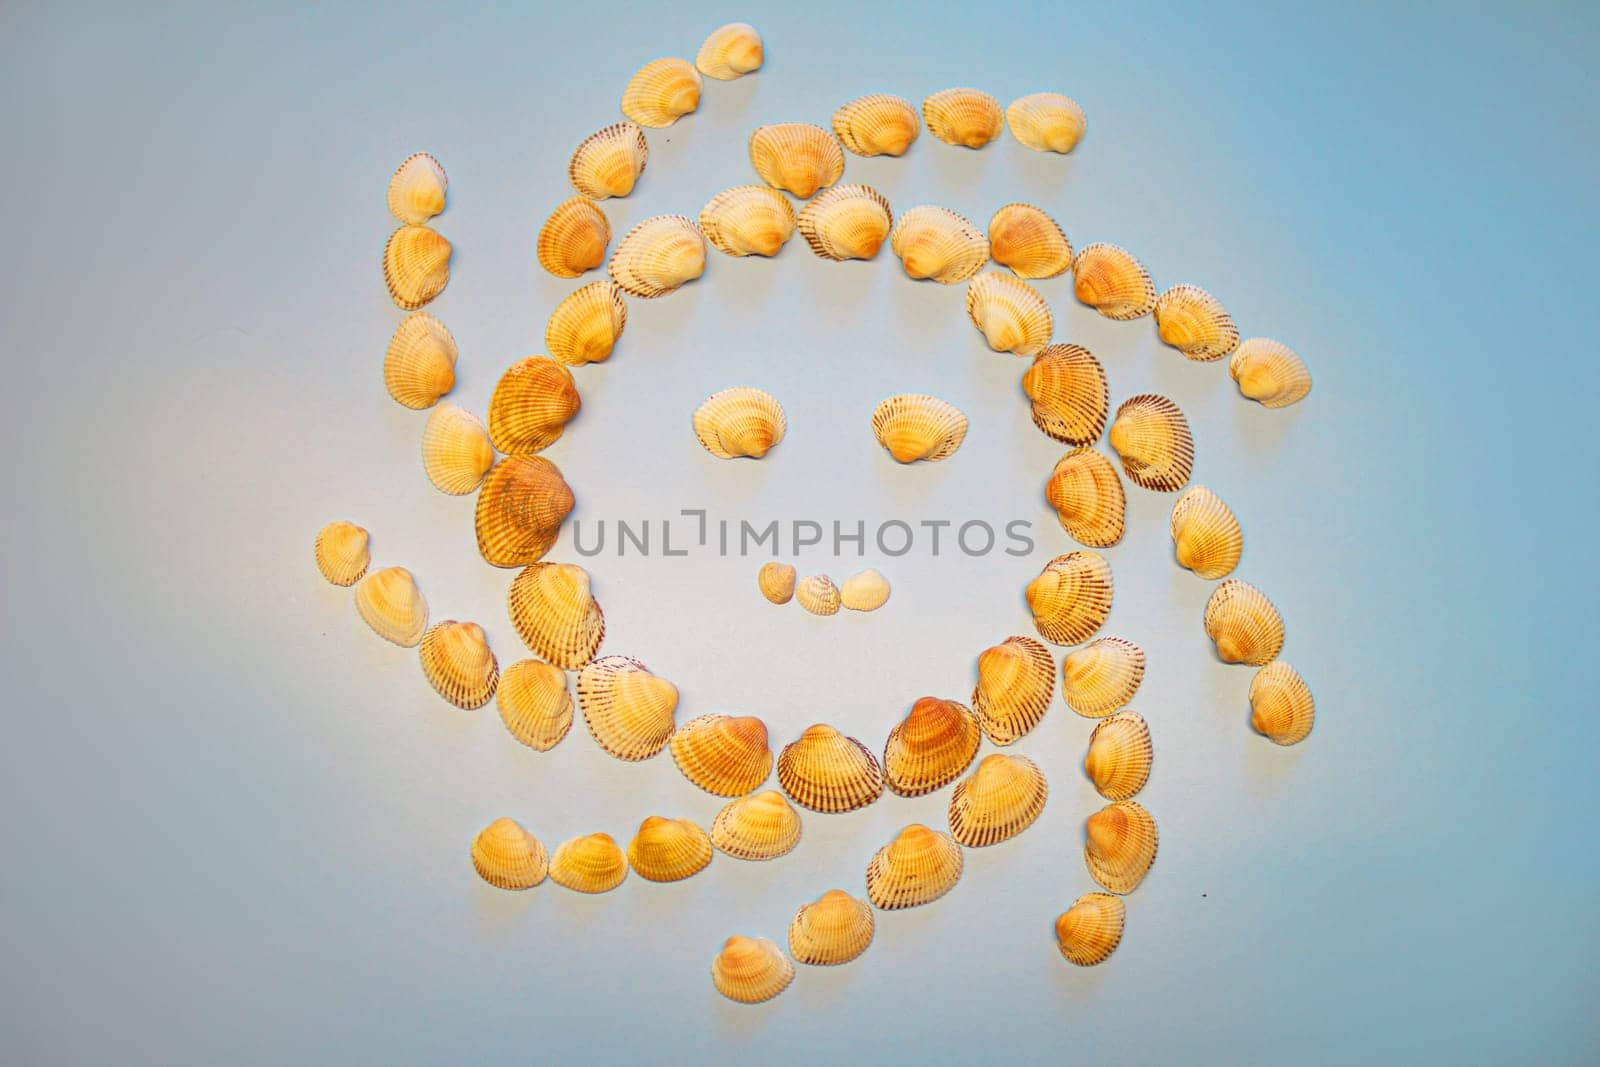 Smiling sun made of seashells by VeronikaAngo